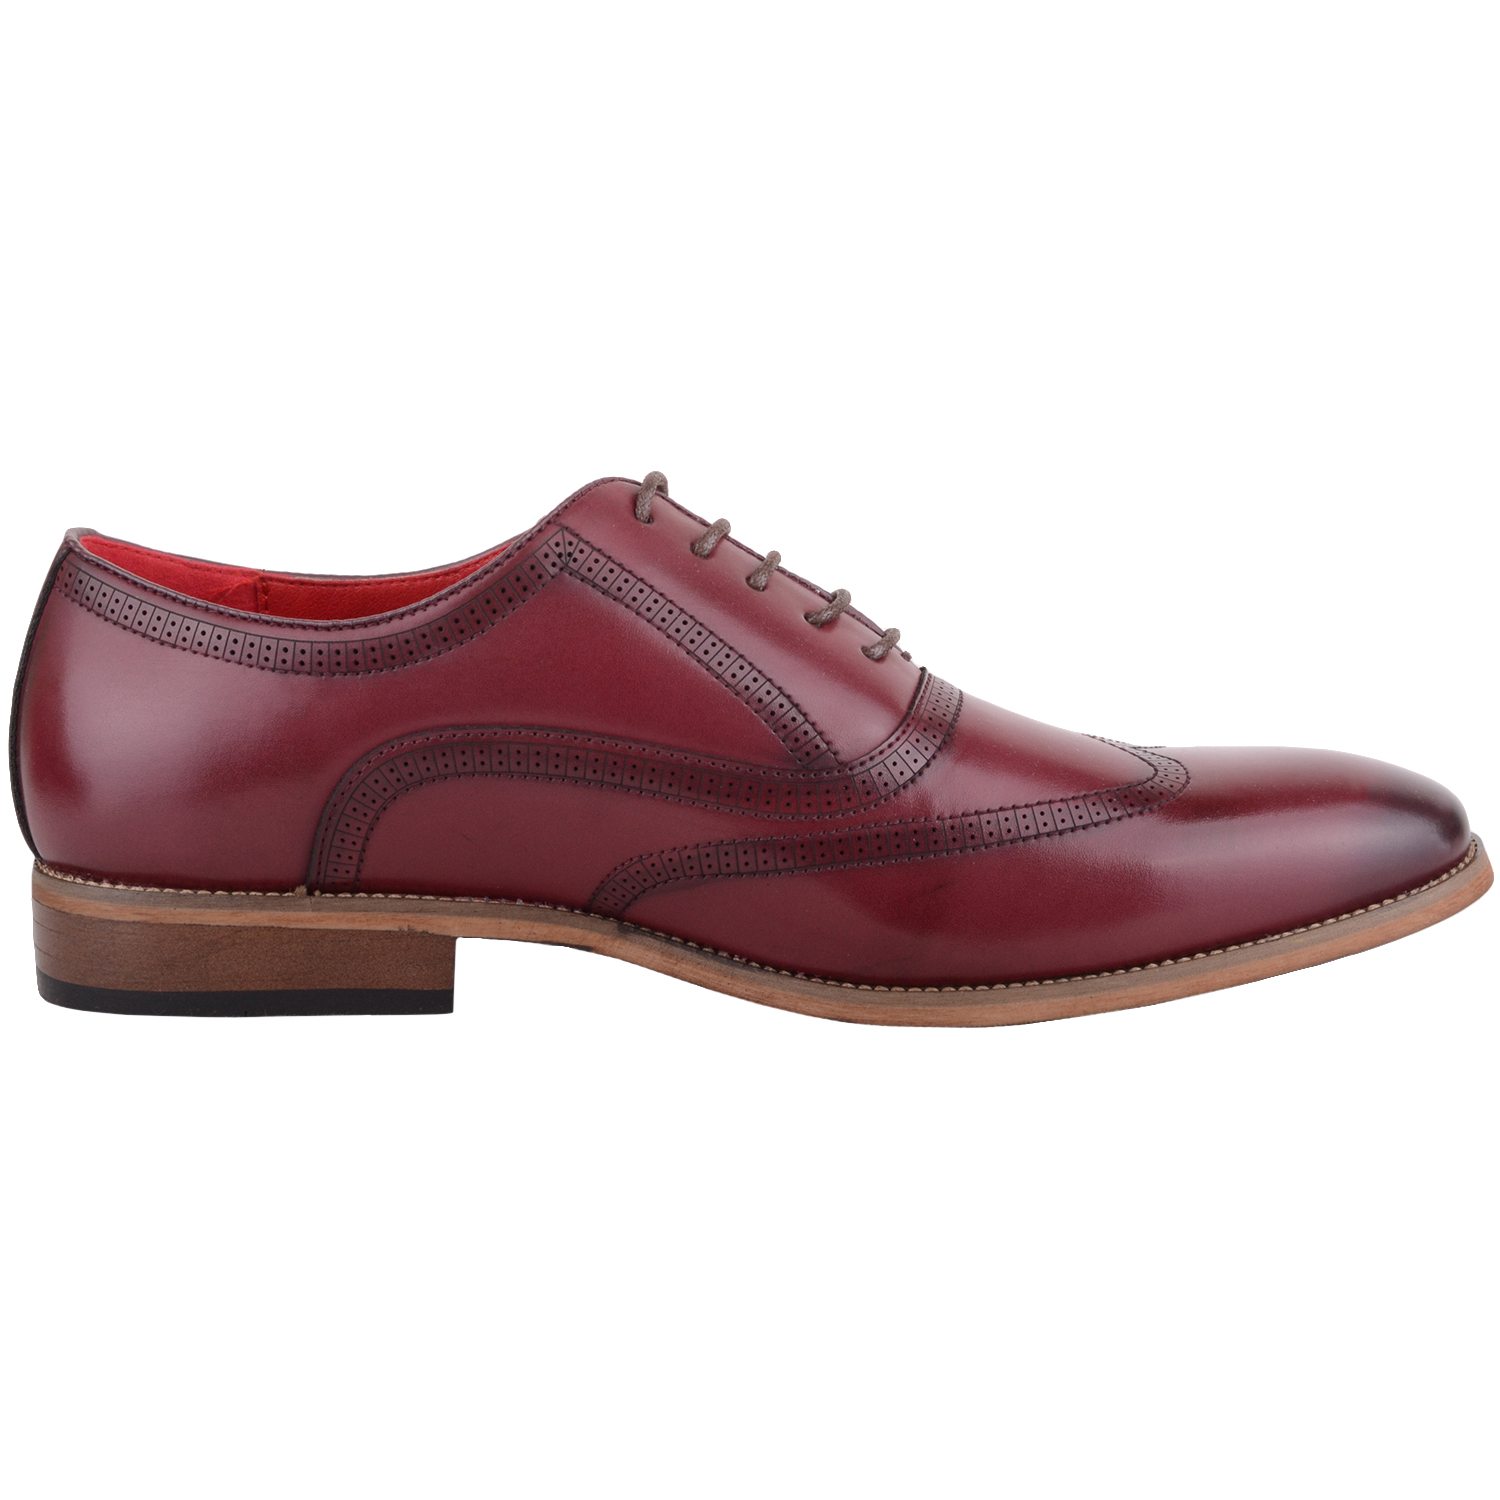 Mens Lace Up Faux Leather Formal Smart Work Suit Shoes (Color: Bordeaux, Size: UK 8) by Absolute Footwear